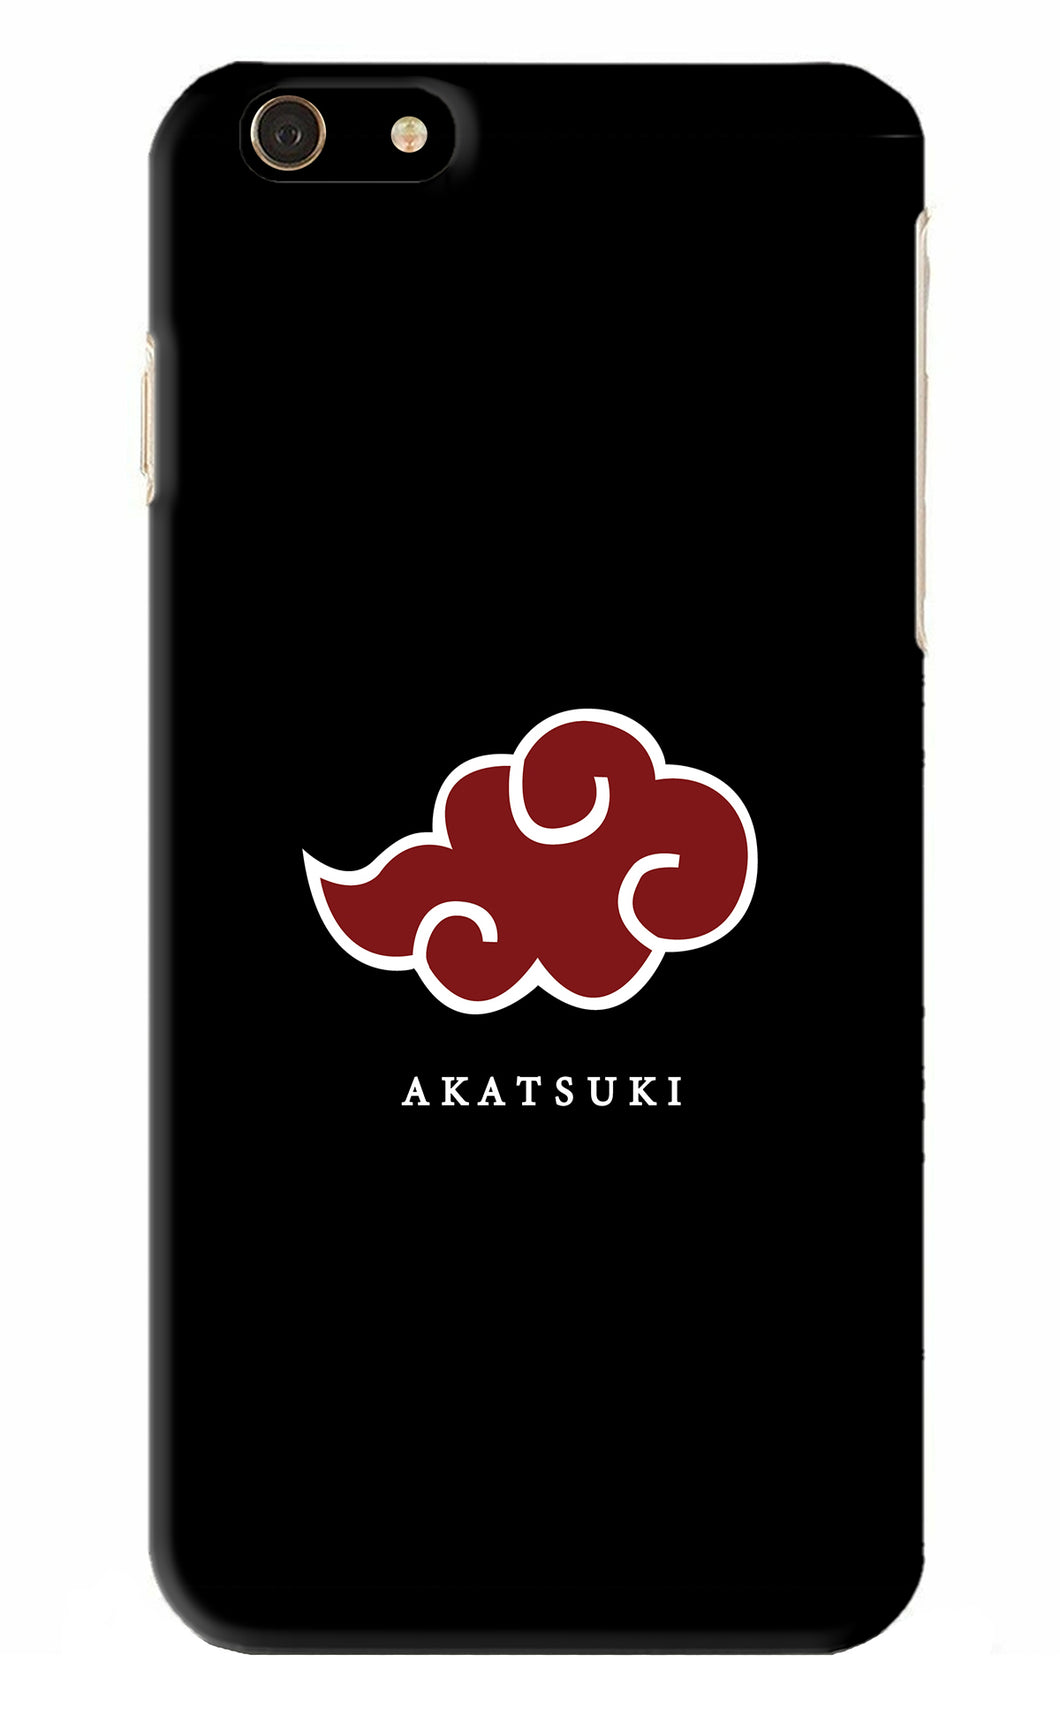 Akatsuki 1 iPhone 6S Plus Back Skin Wrap